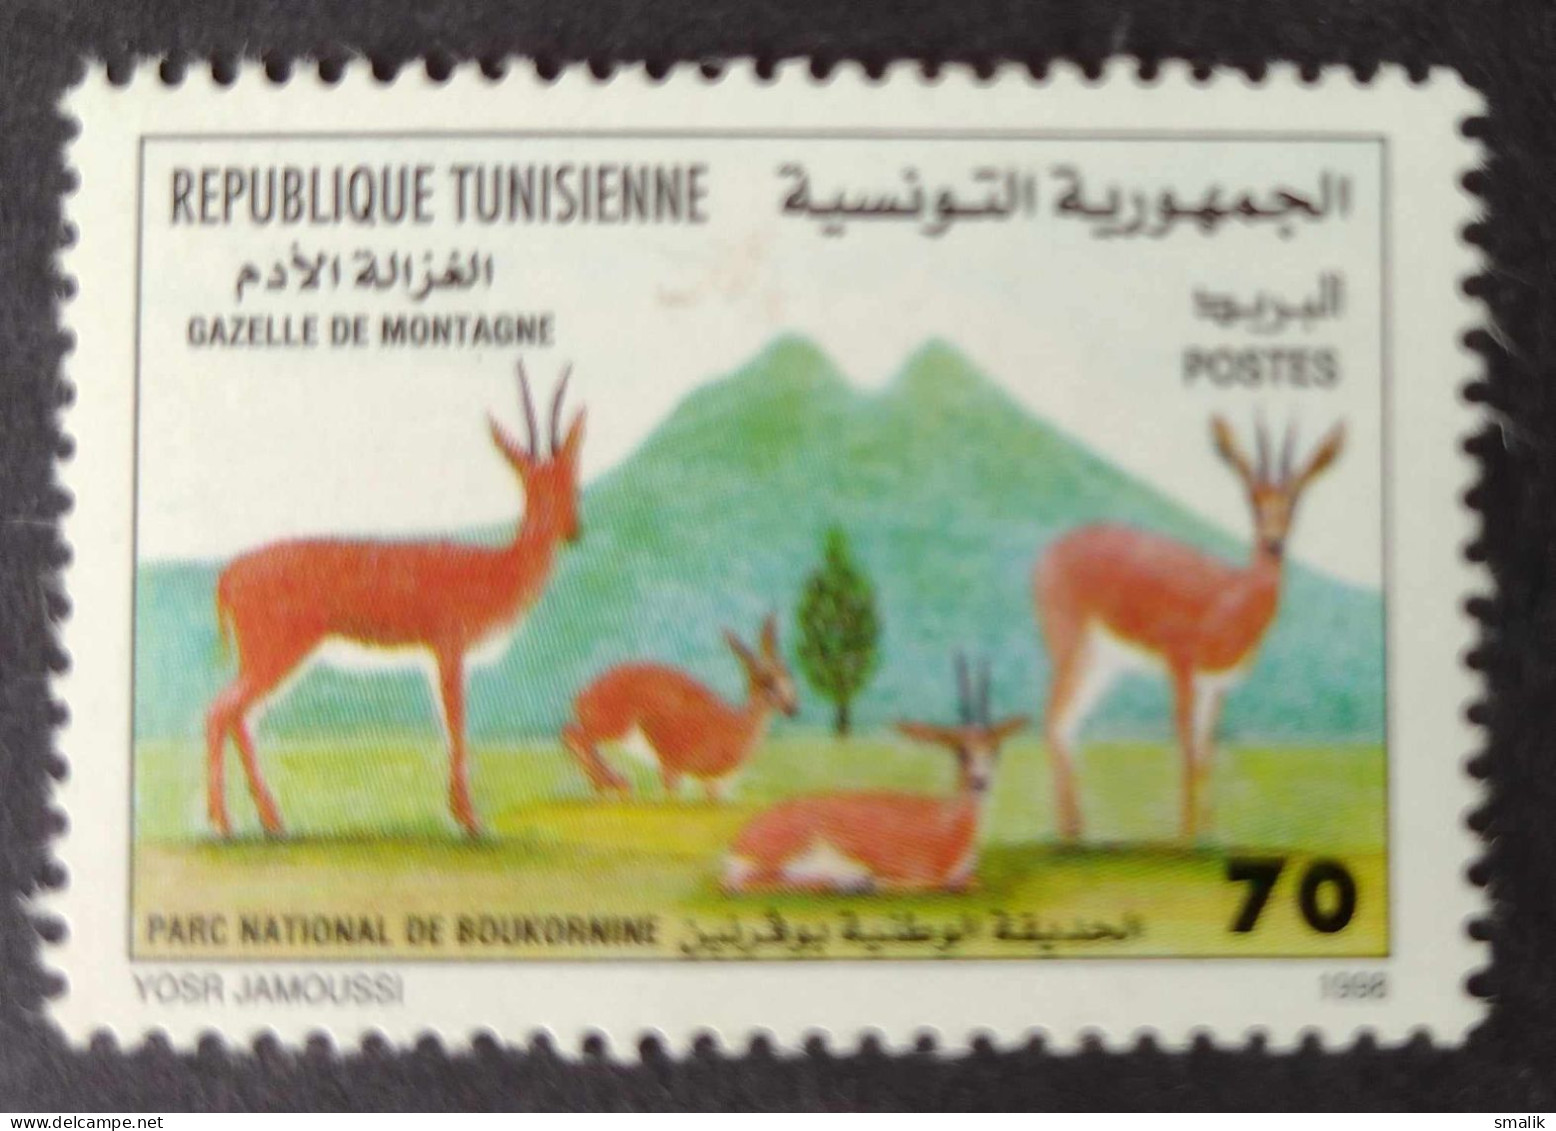 TUNIS TUNISIA 1998 - Gazelle Animals, MNH - Tunisie (1956-...)